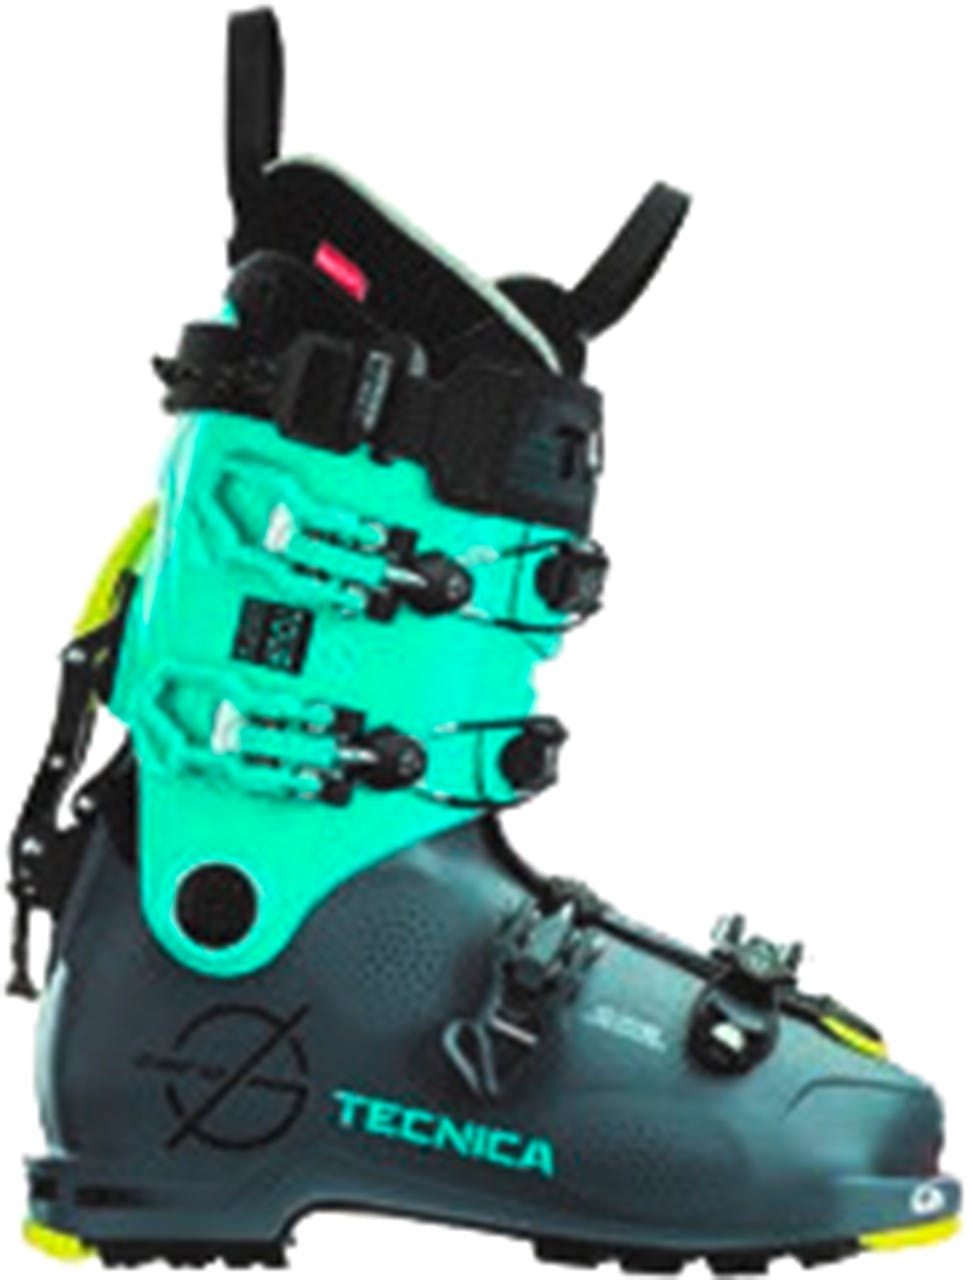 Bottes de ski Zero G Tour Scout Gris/Bleu clair